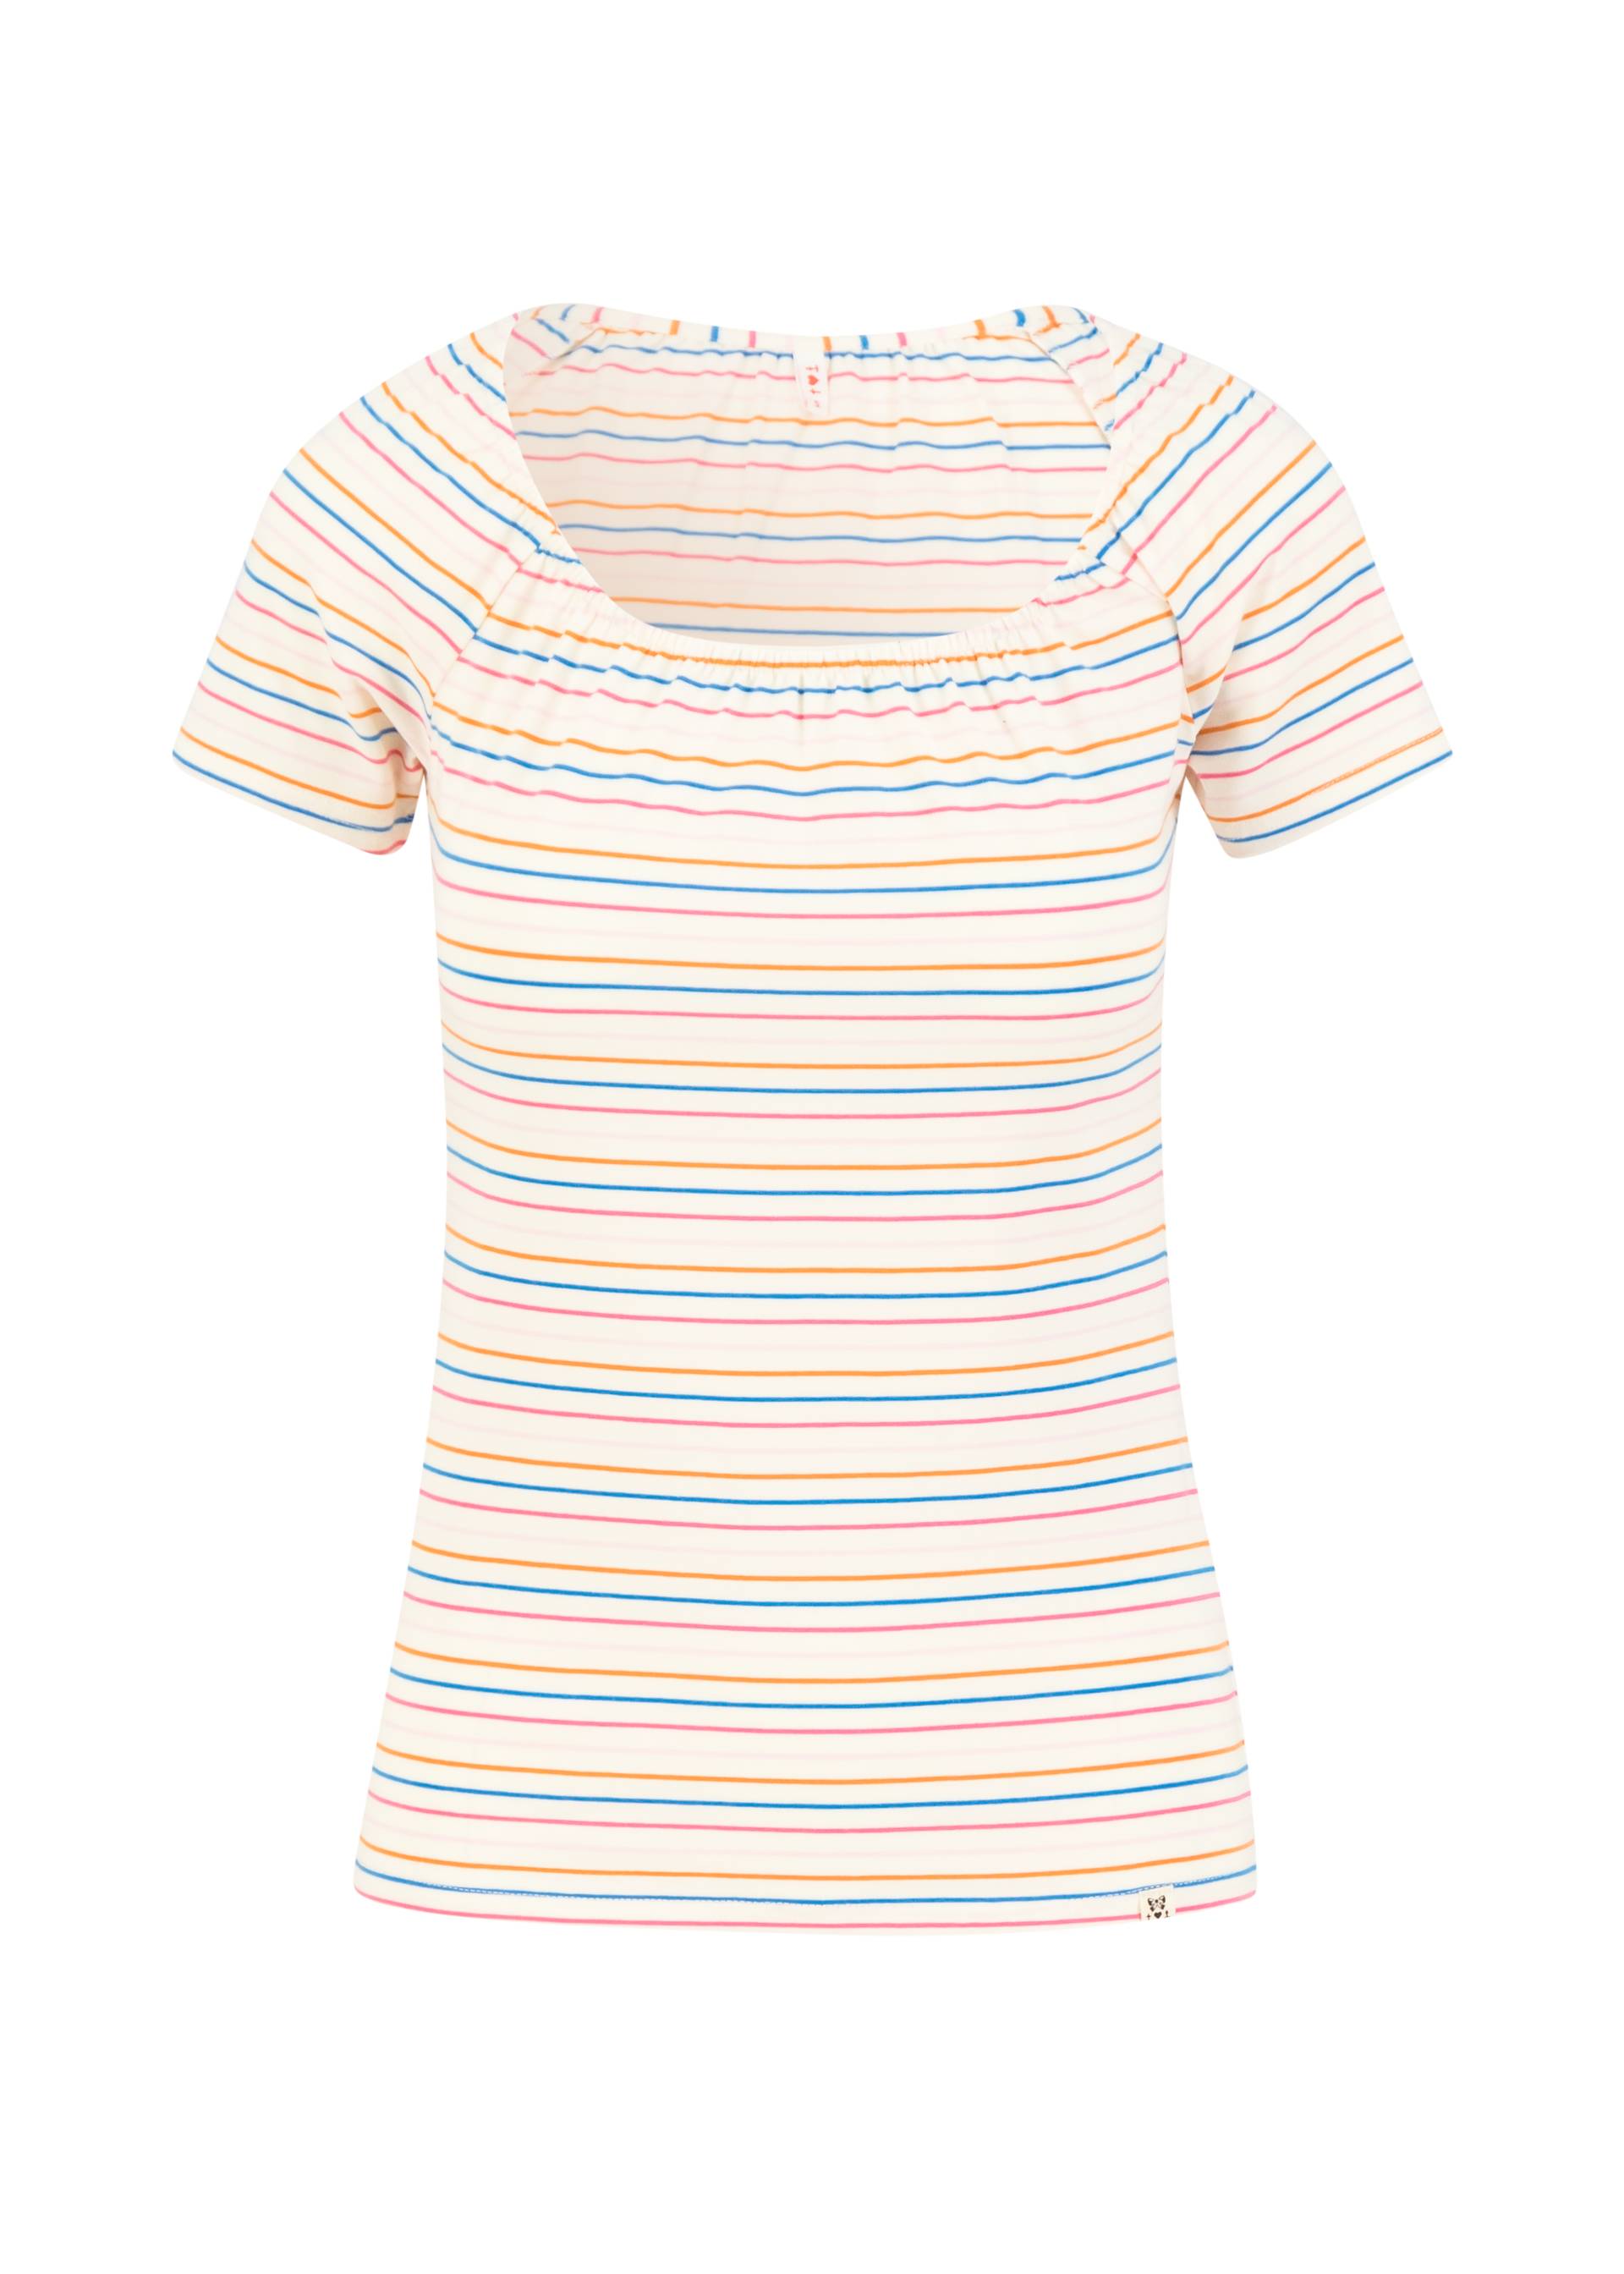 T-Shirt Vintage Heart, petite rainbow stripes, Shirts, Weiß